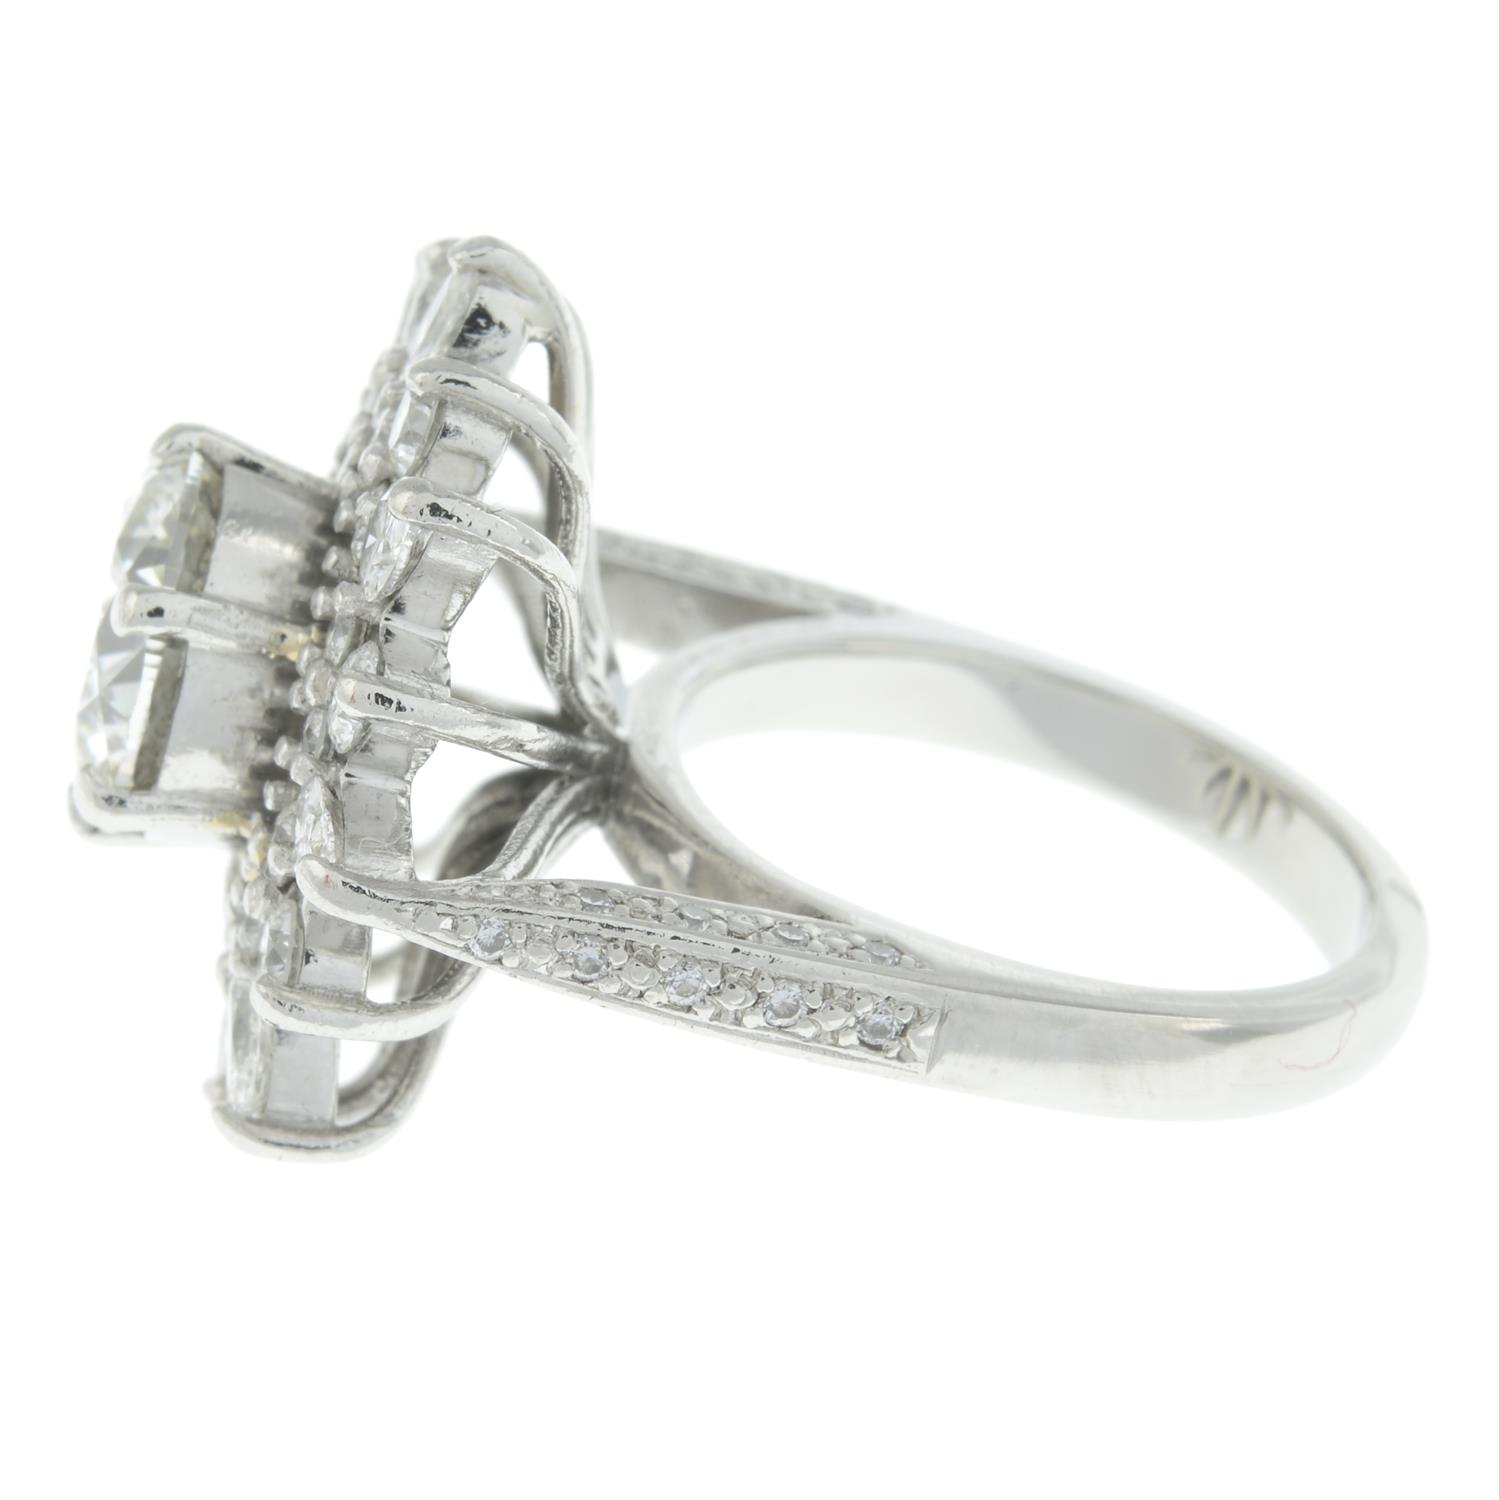 Platinum diamond floral dress ring - Image 3 of 6